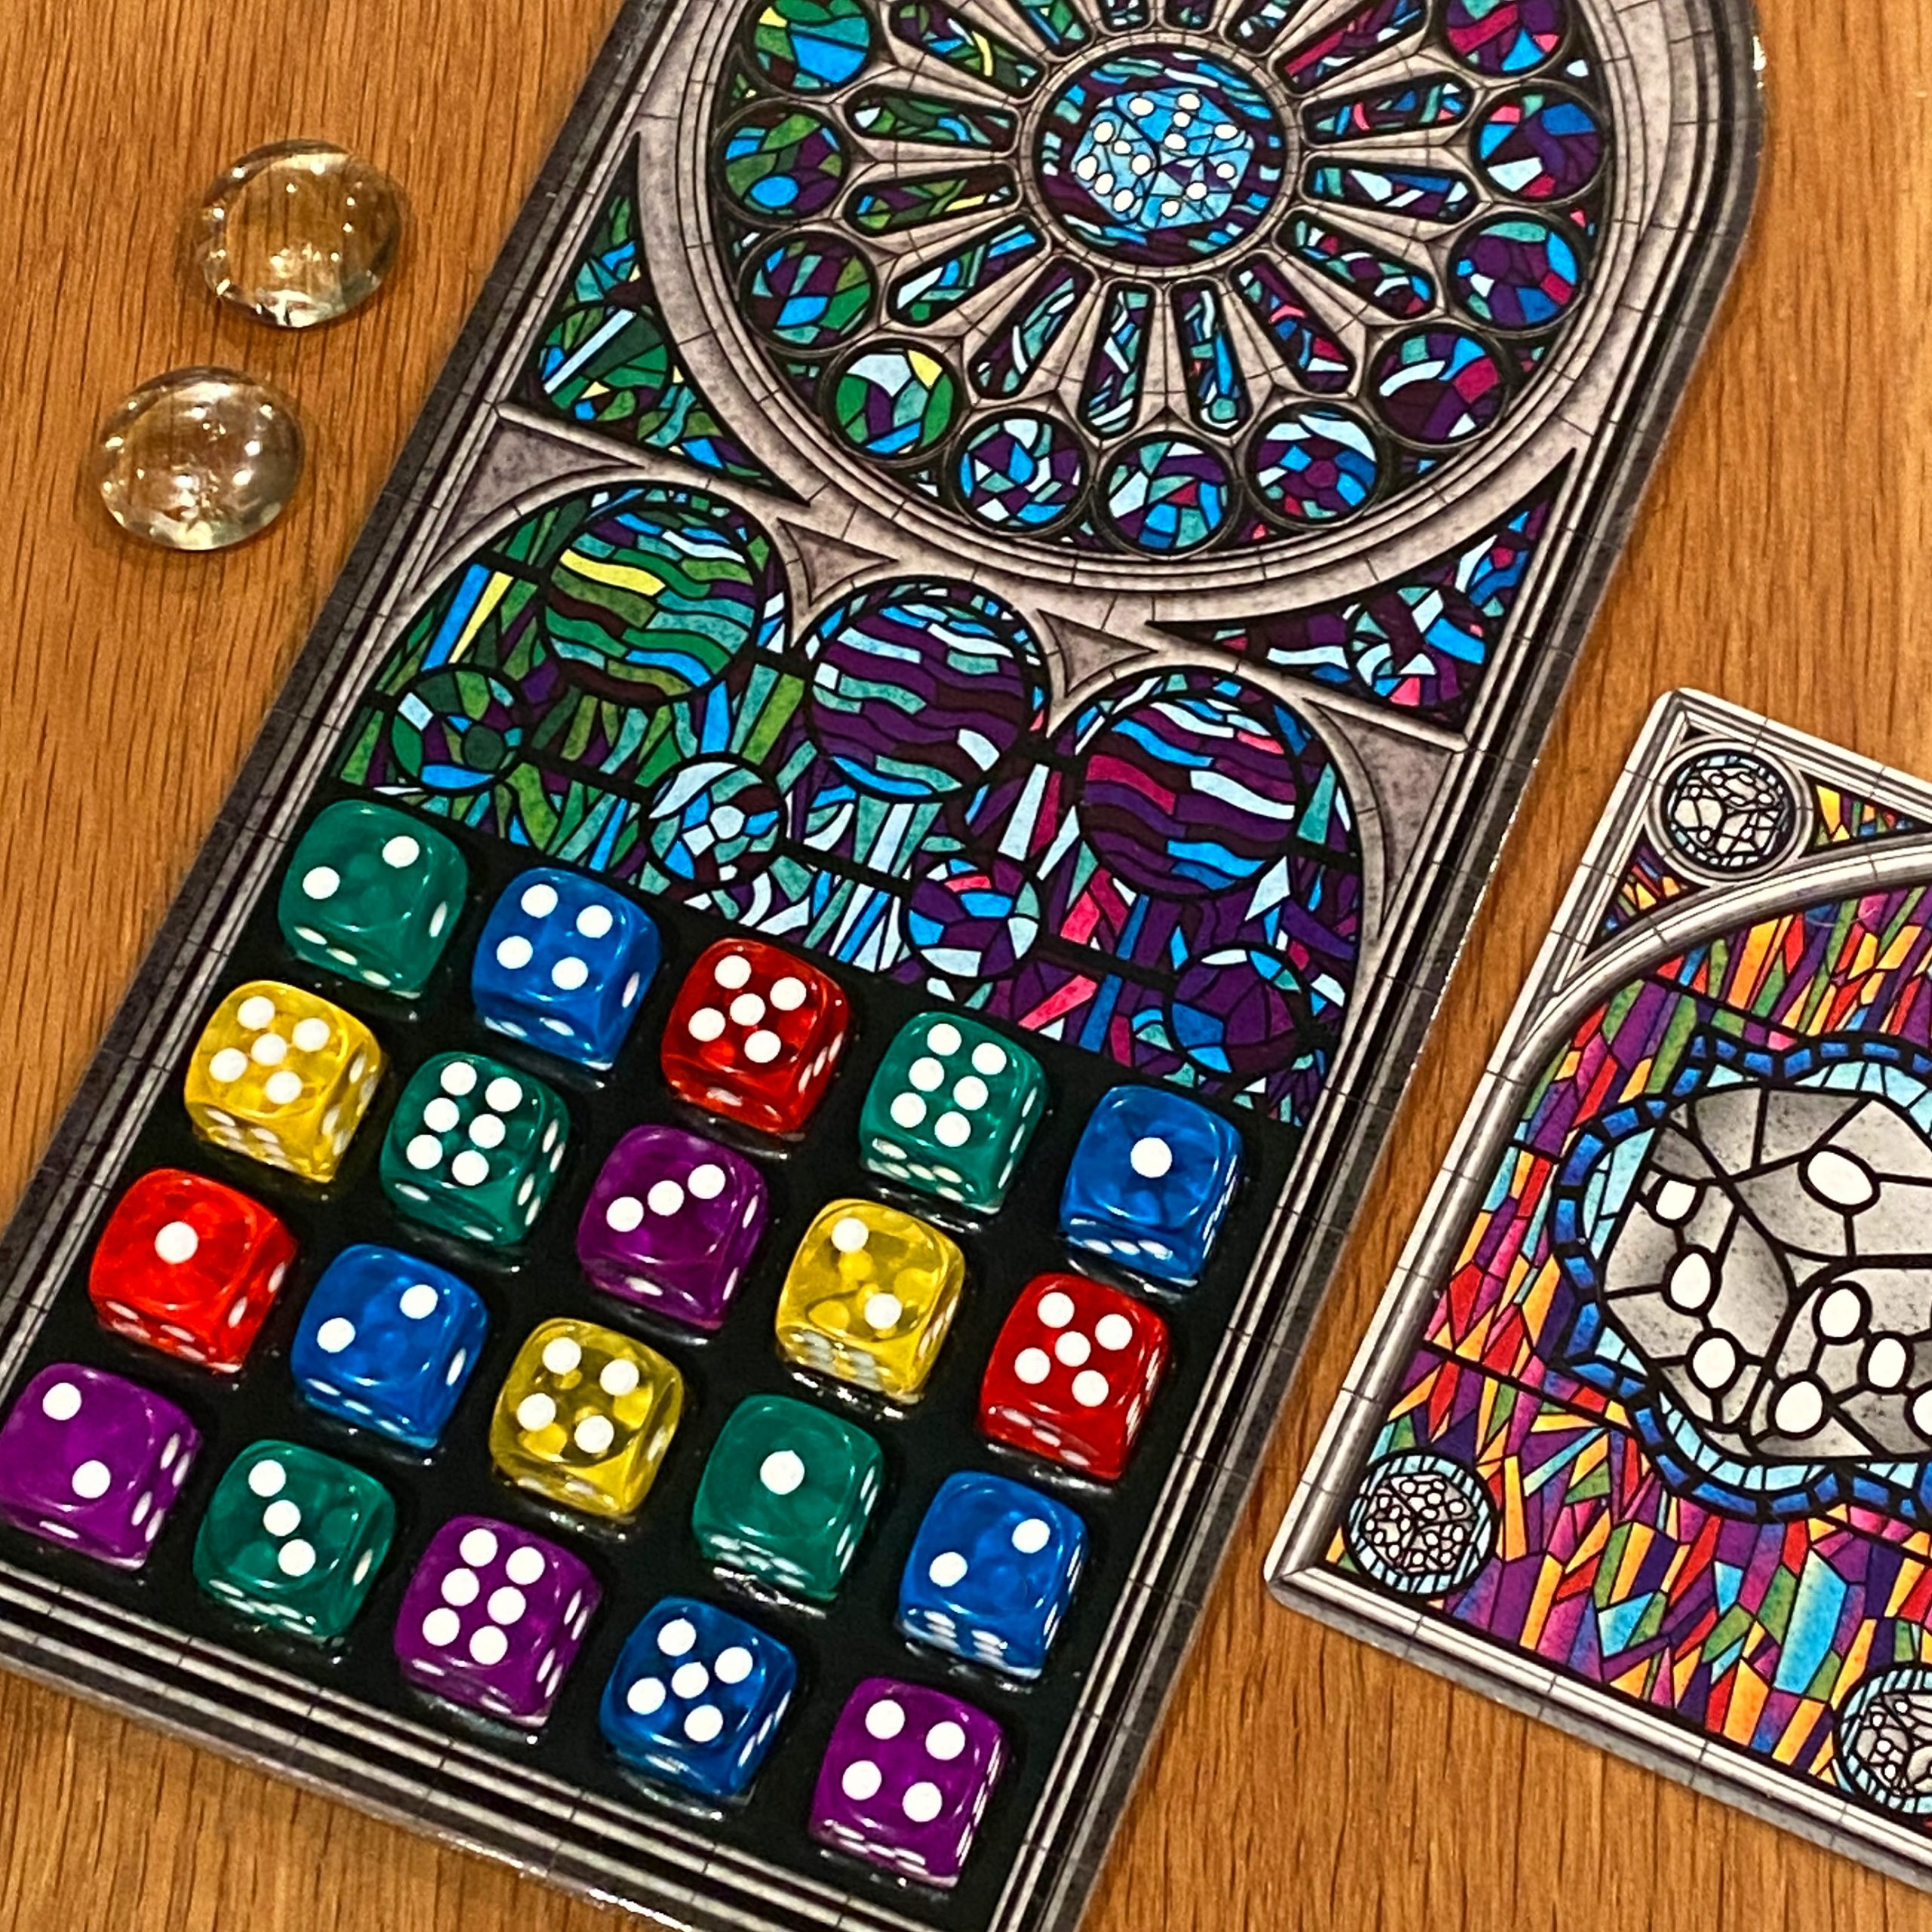 Sagrada board game